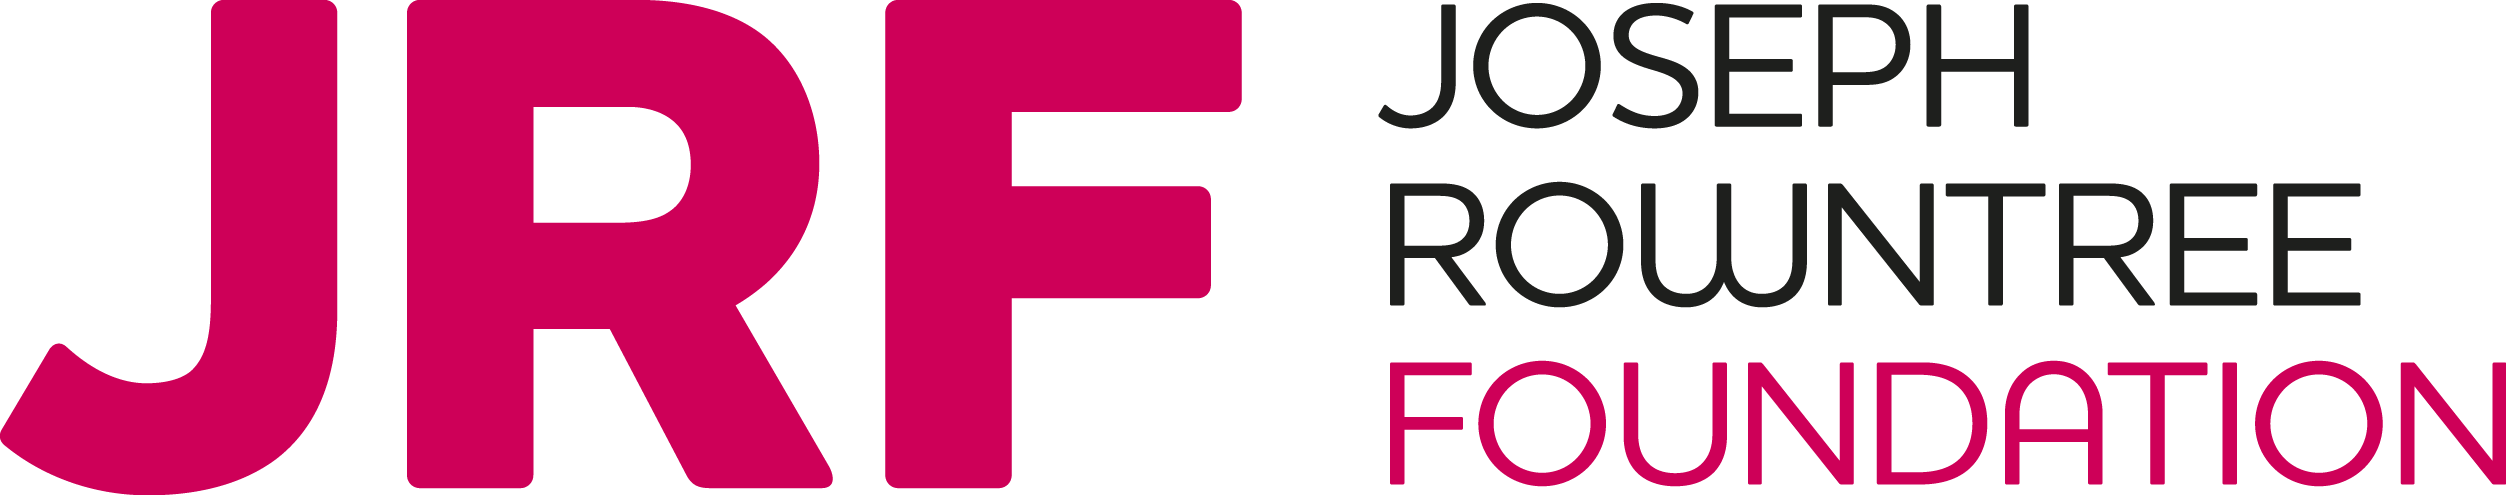 logo for Joseph Rowntree Foundation